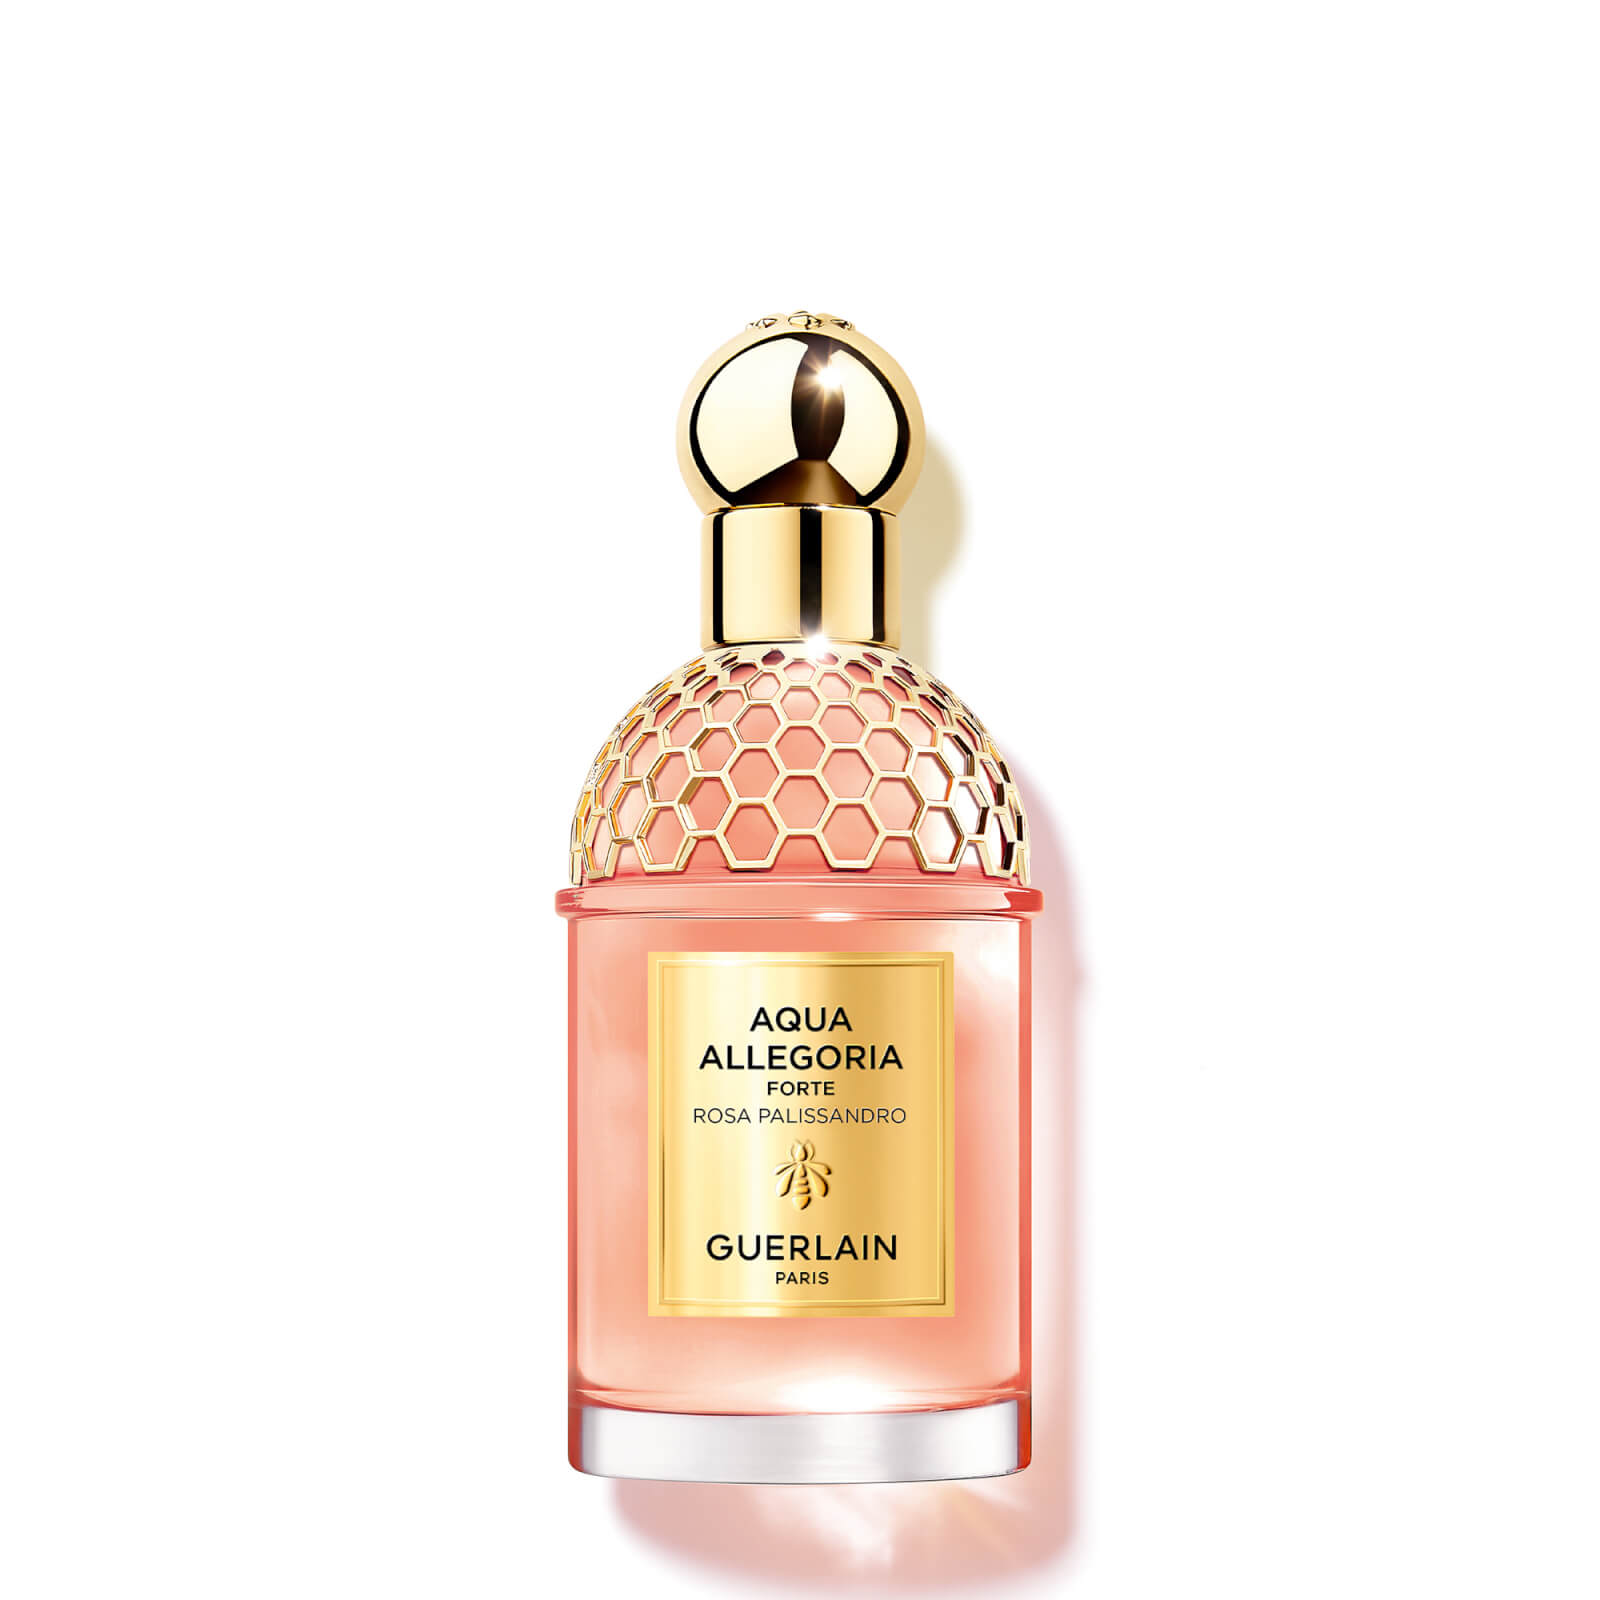 Photos - Women's Fragrance Guerlain Aqua Allegoria Forte Rosa Palissandro Eau de Parfum 75ml 